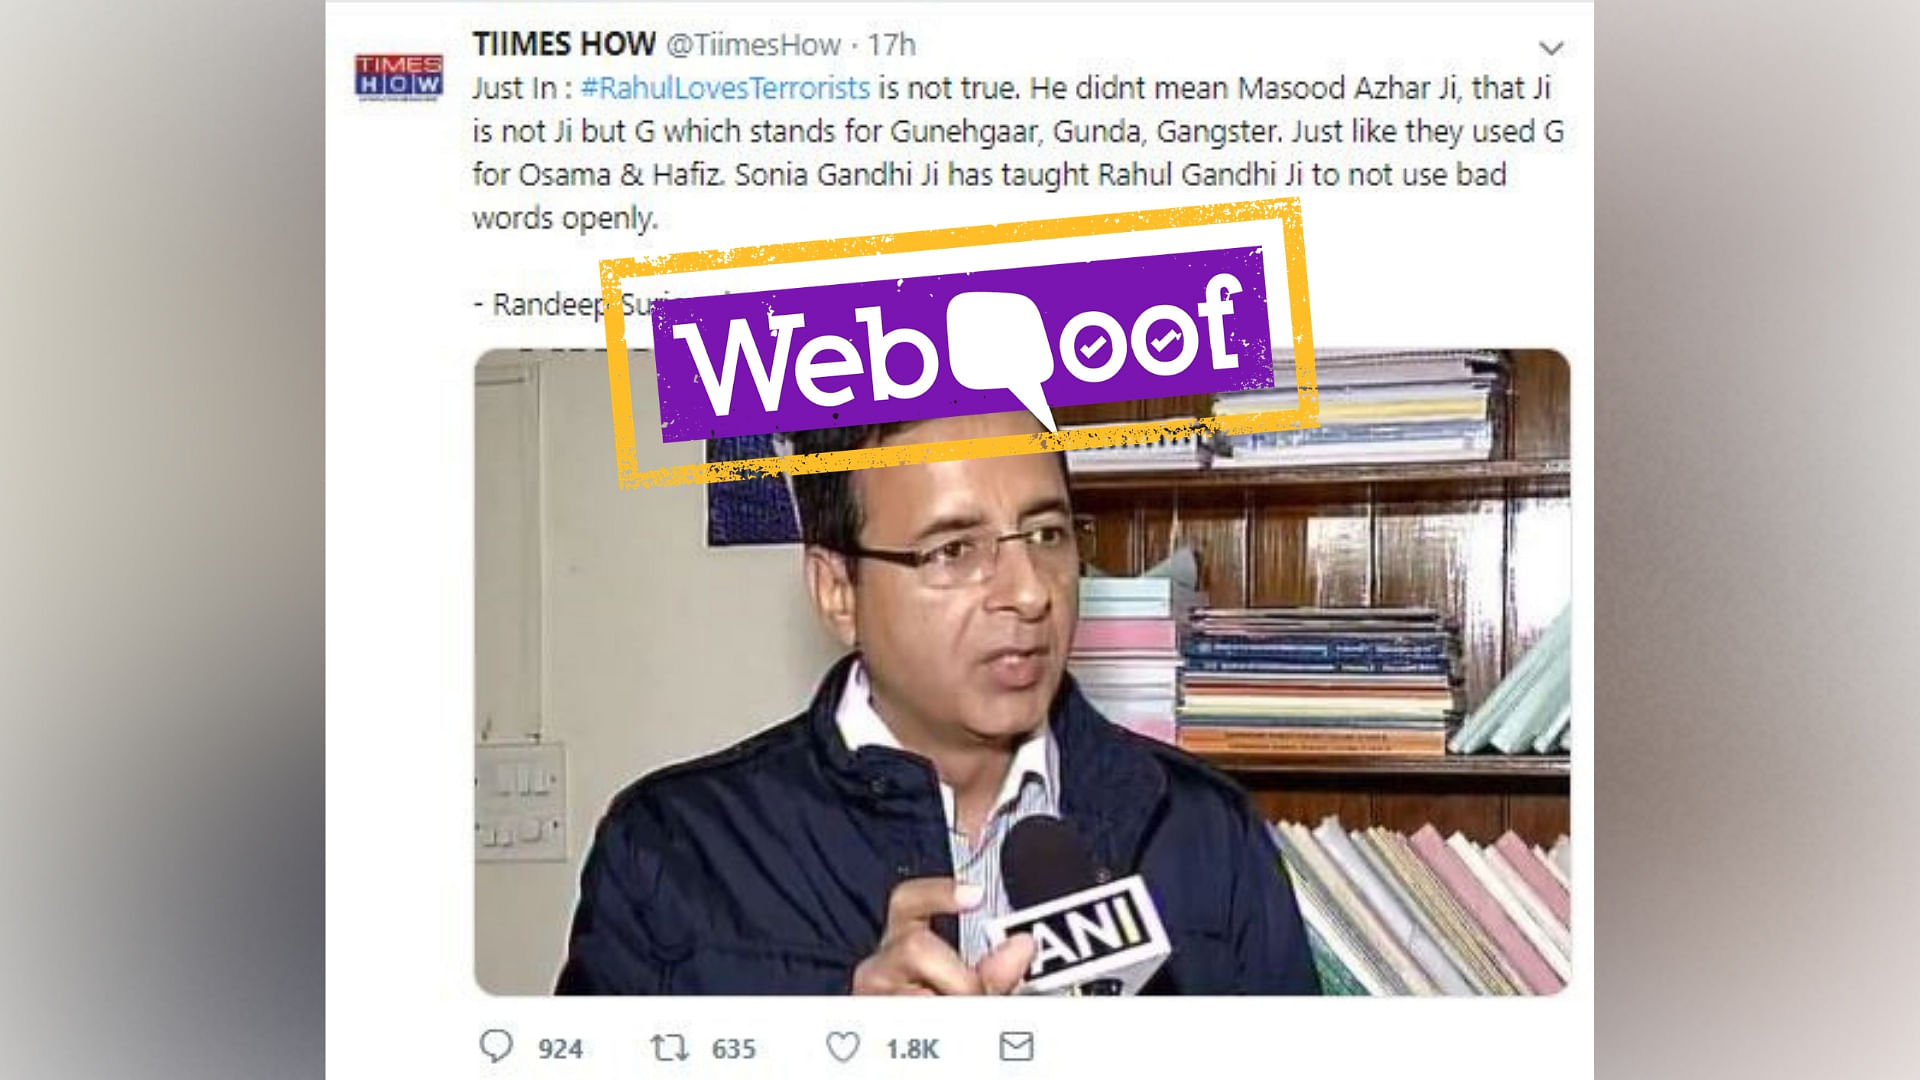 The parody tweet quotes Randeep Surjewala as saying “Rahul didn’t mean Masood Azhar ji, that ji is not ji but G which stands for Gunehgaar, Gunda, Gangster.”